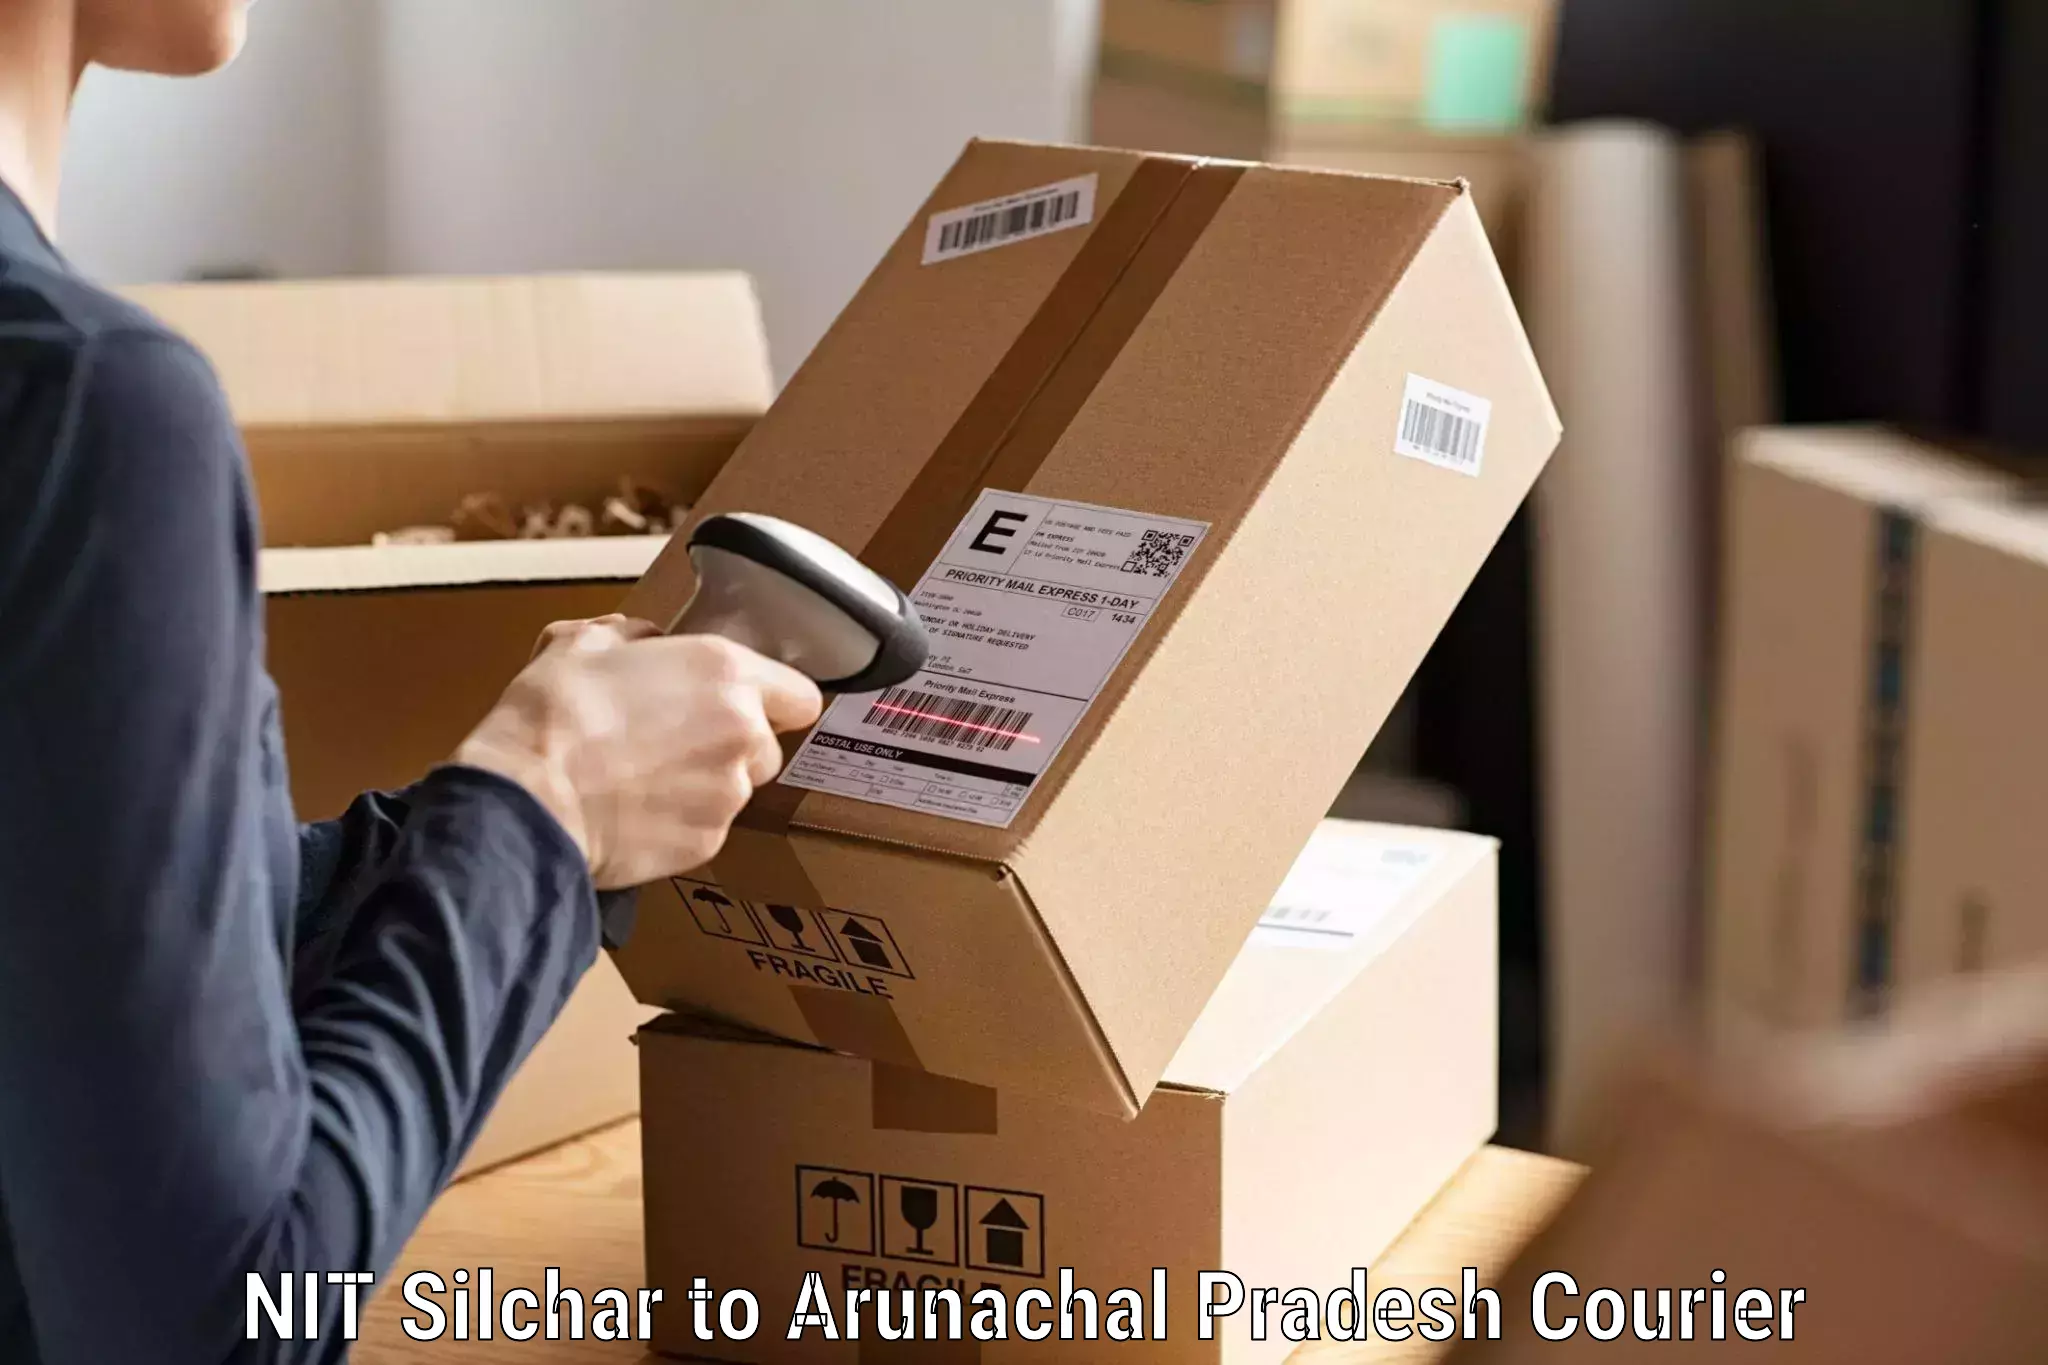 Affordable parcel service NIT Silchar to Tezu